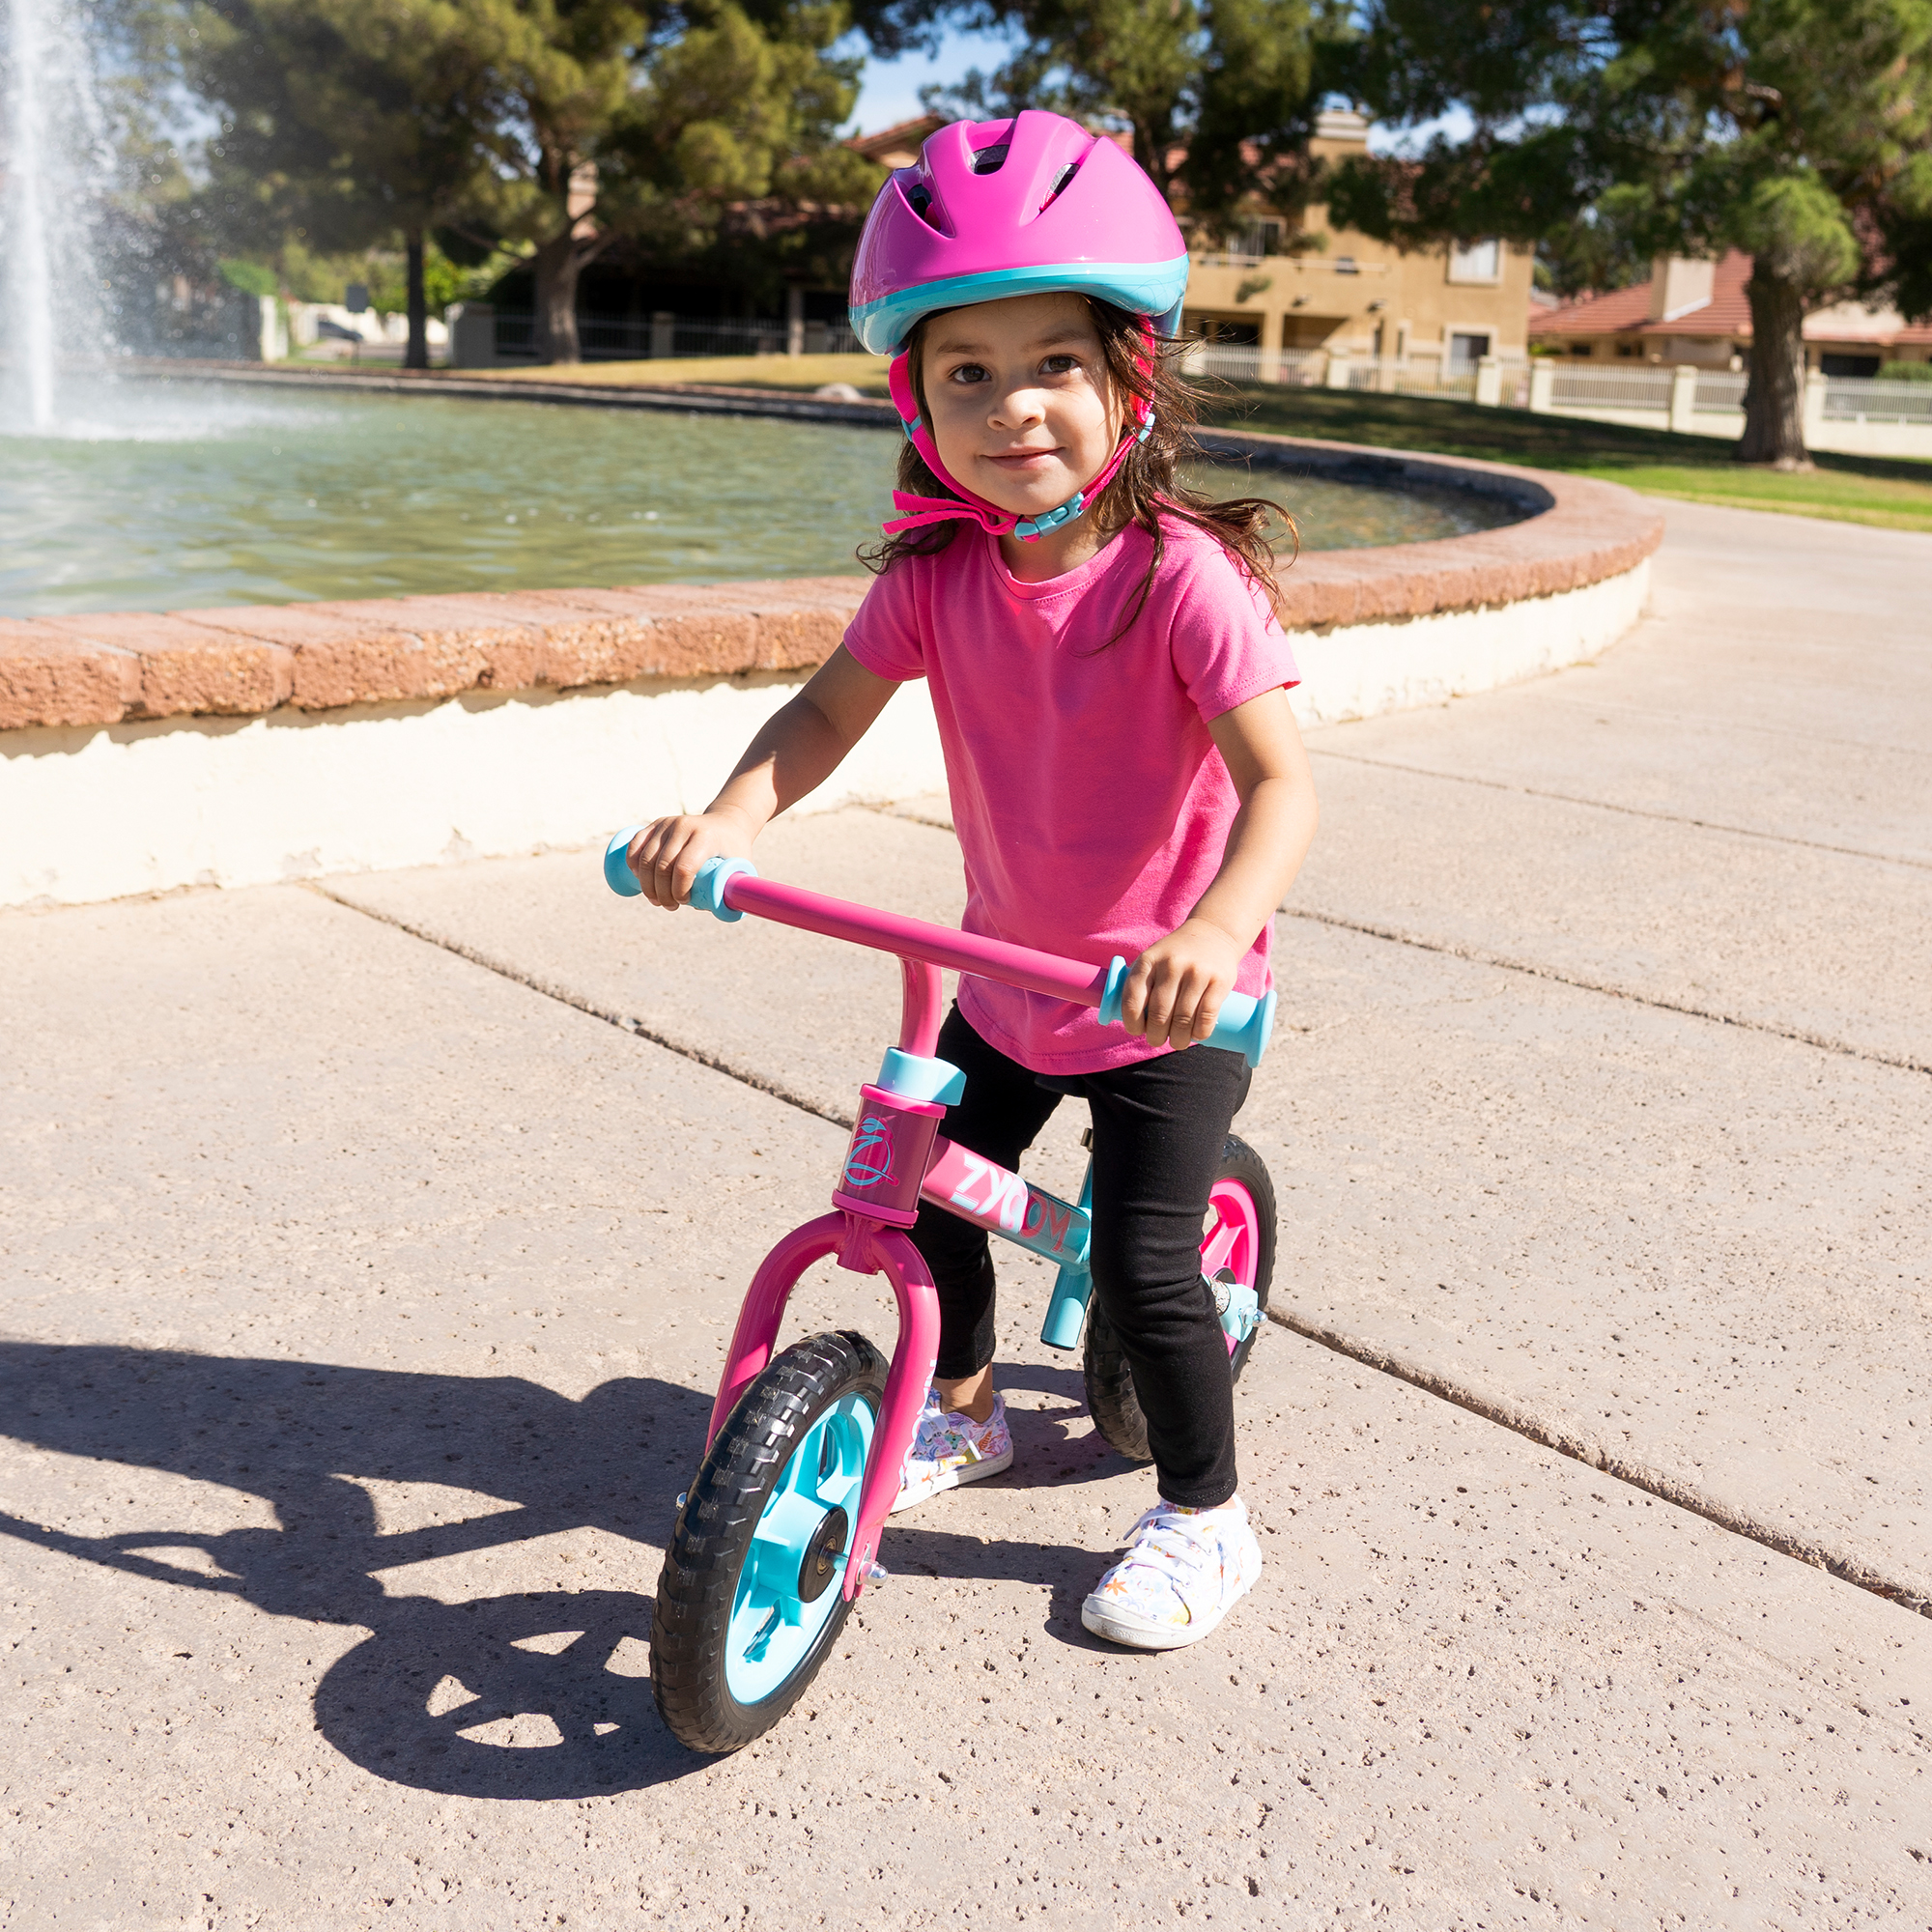 Zycom 10-inch Toddlers Balance Bike Adjustable Helmet Airless Wheels Lightweight Training Bike Pink - image 3 of 11